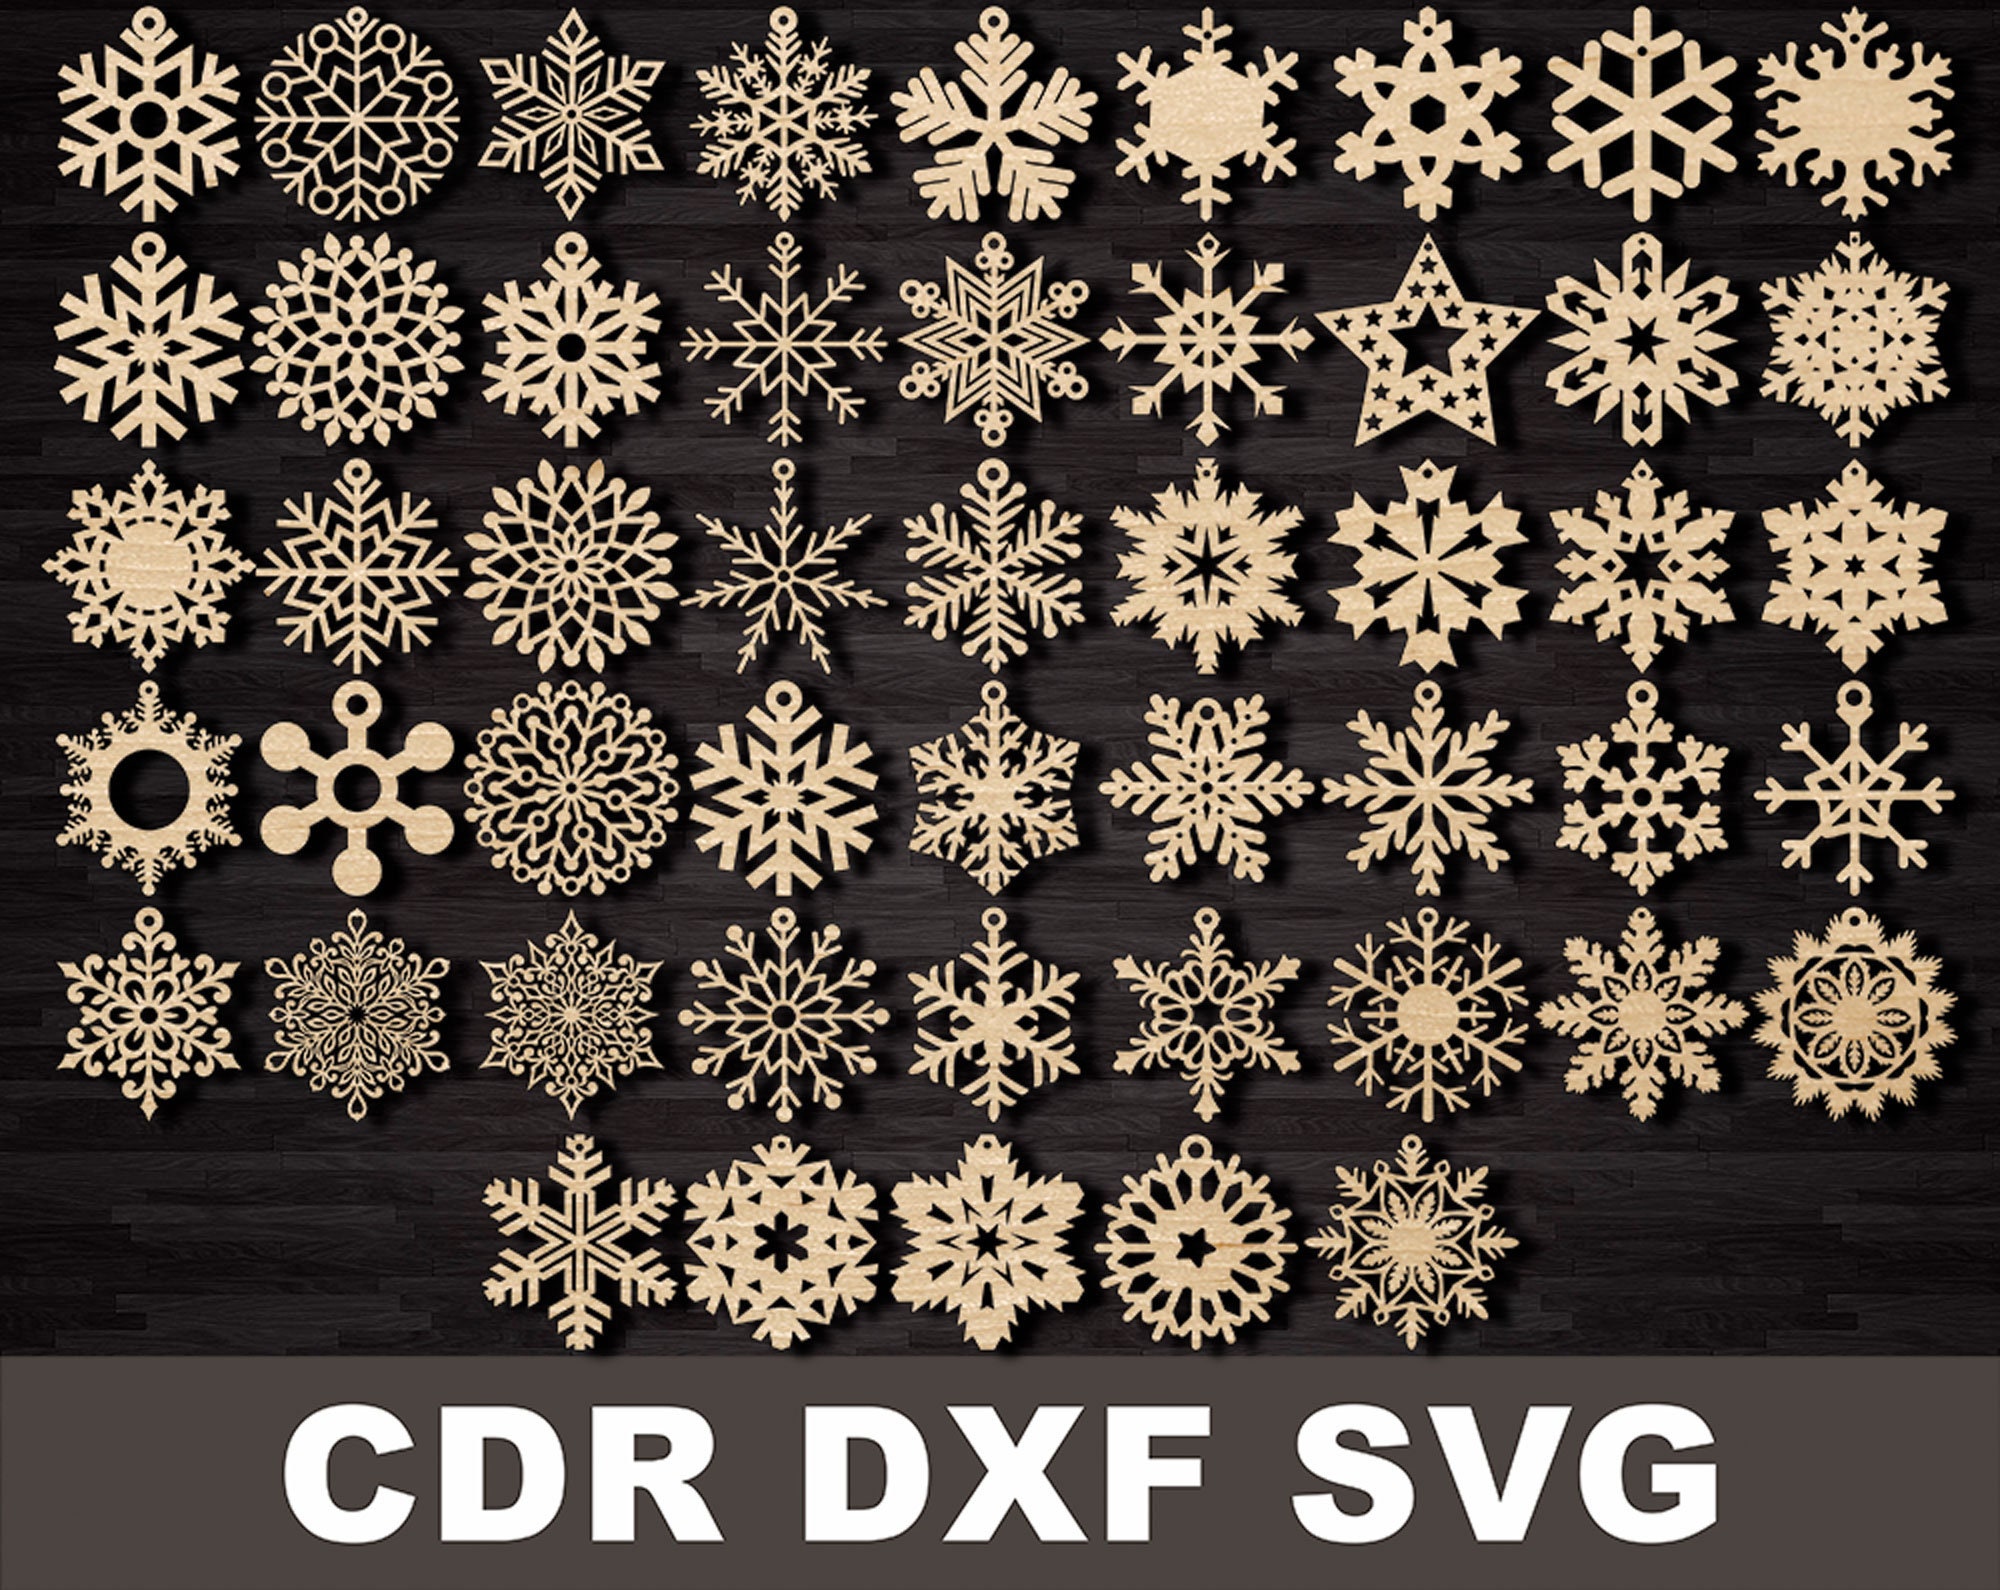 Laser cut wood snowflakes ornaments. Stock Photo by ©Vaitekune 136721586